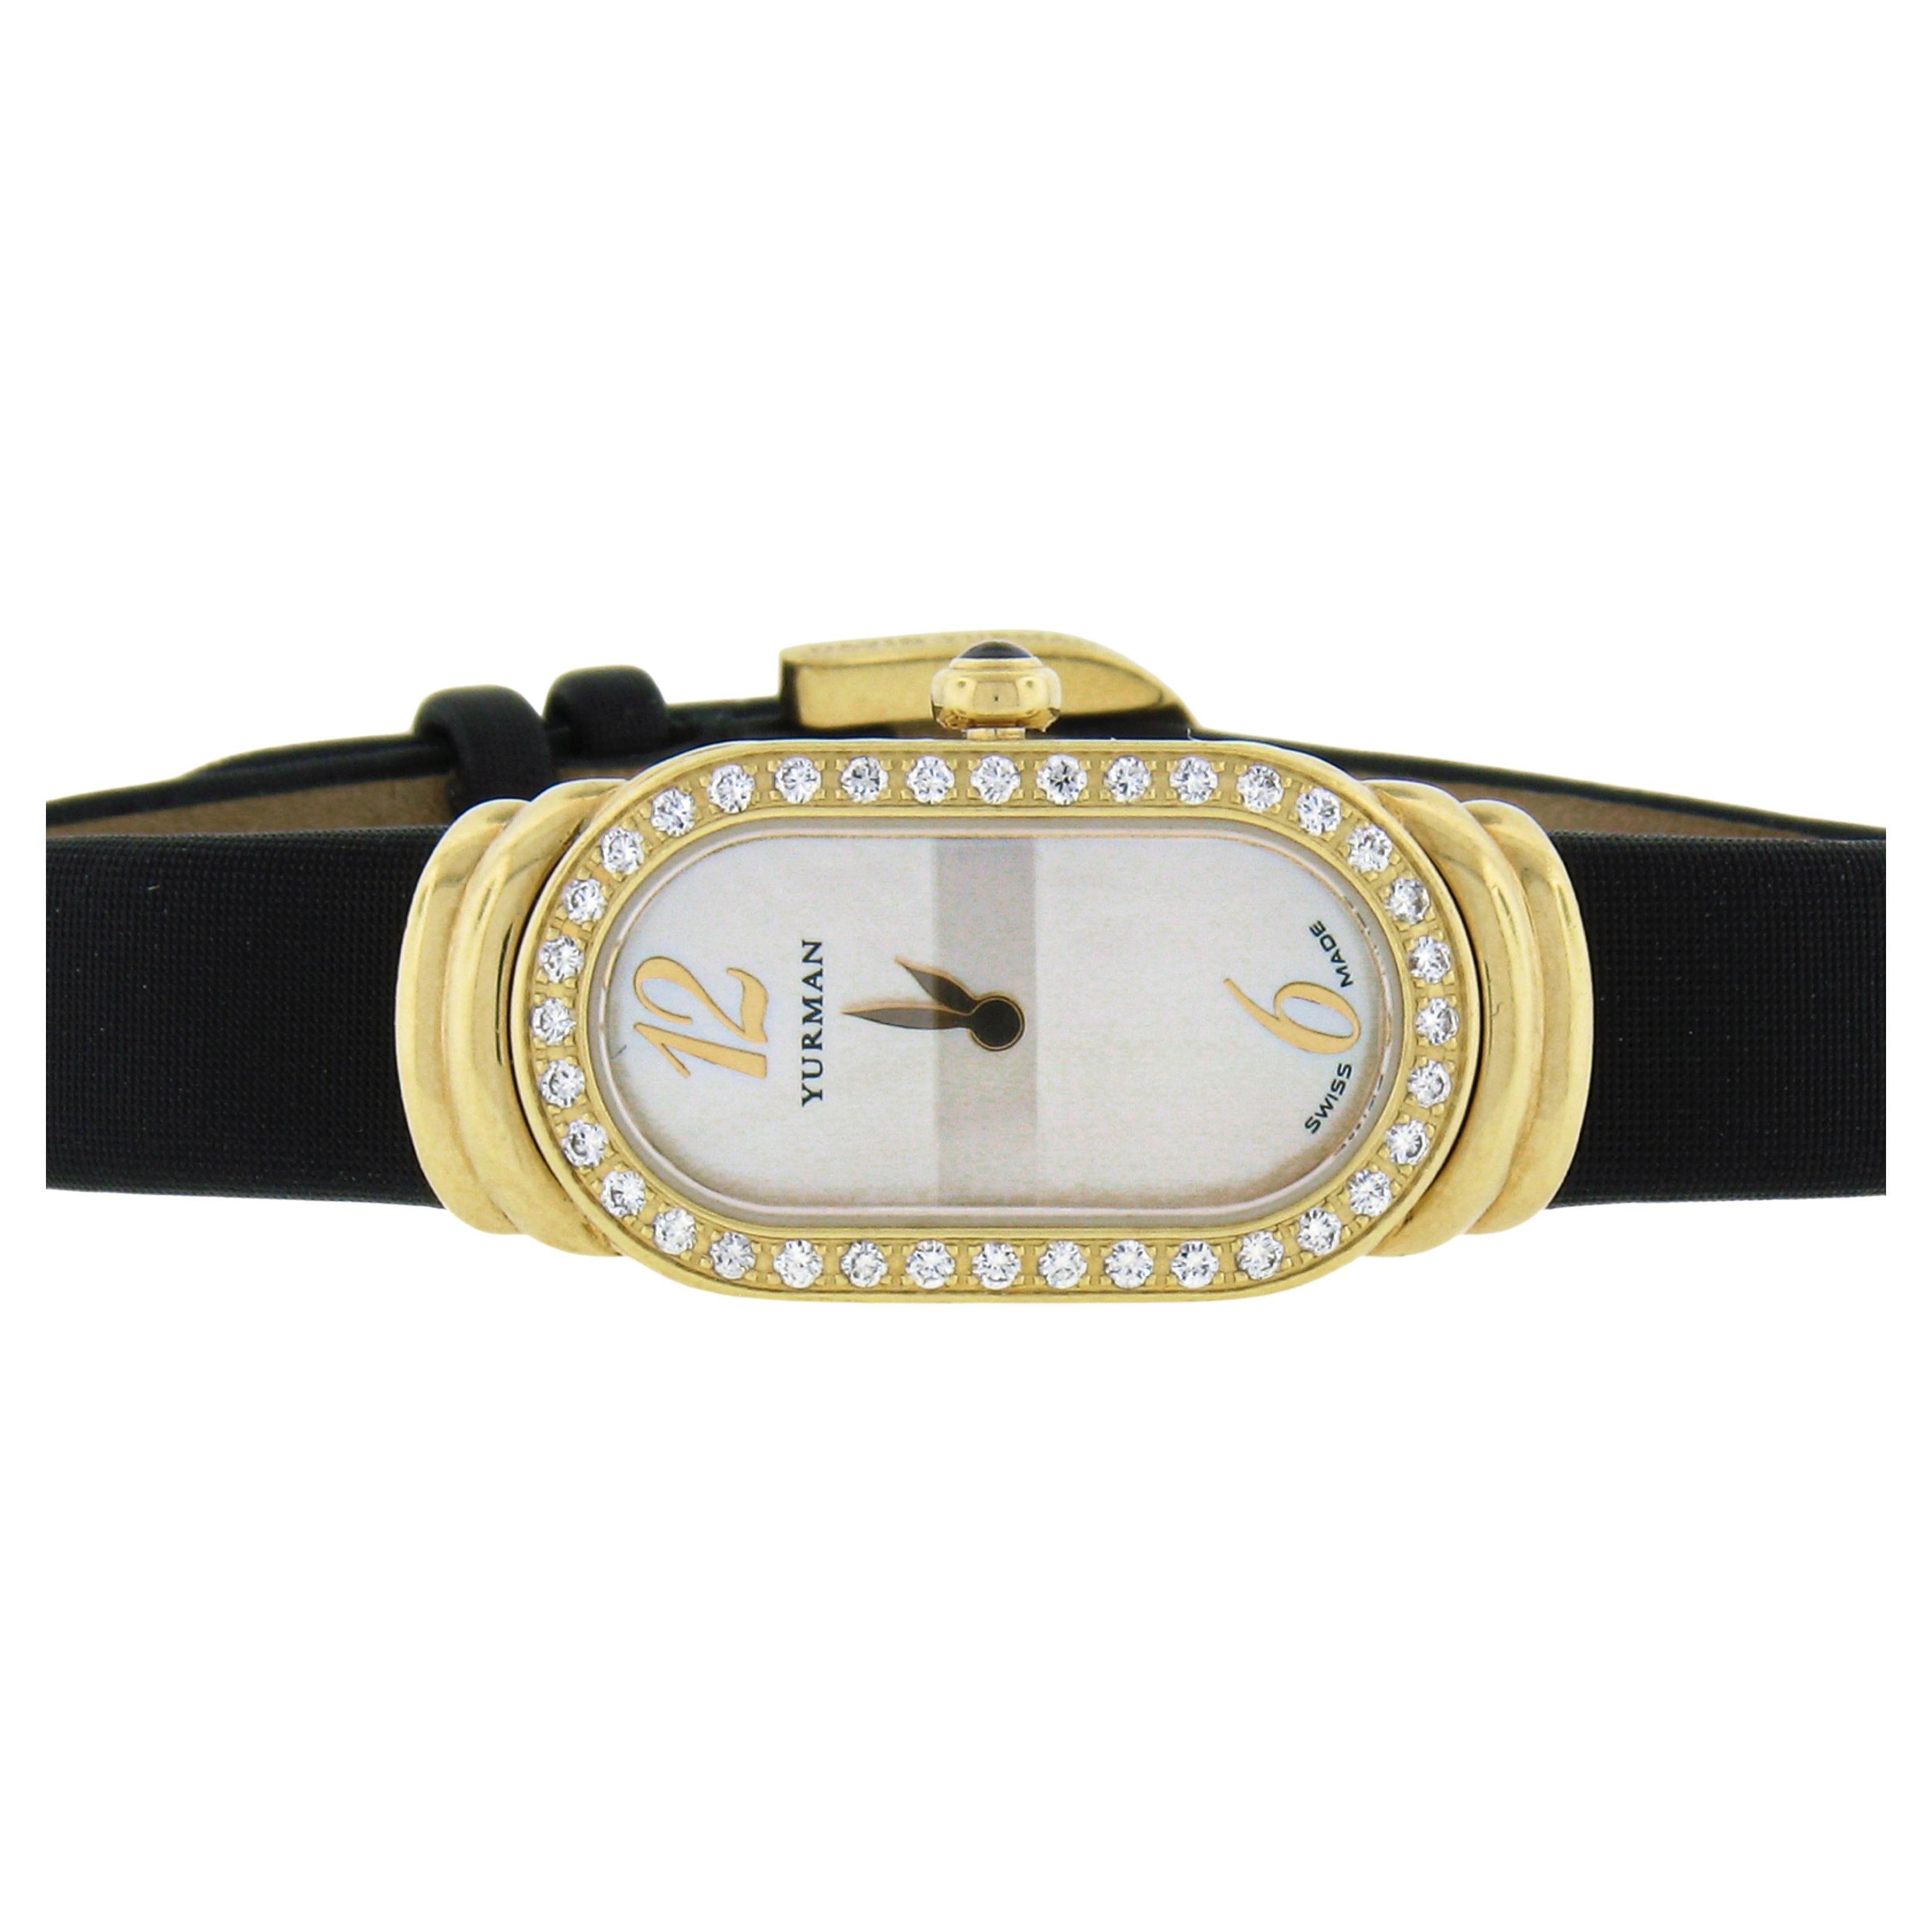 David Yurman Madison Petite 18k Gold Diamond Bezel MOP Dial Wrist Watch T409-P88 en vente